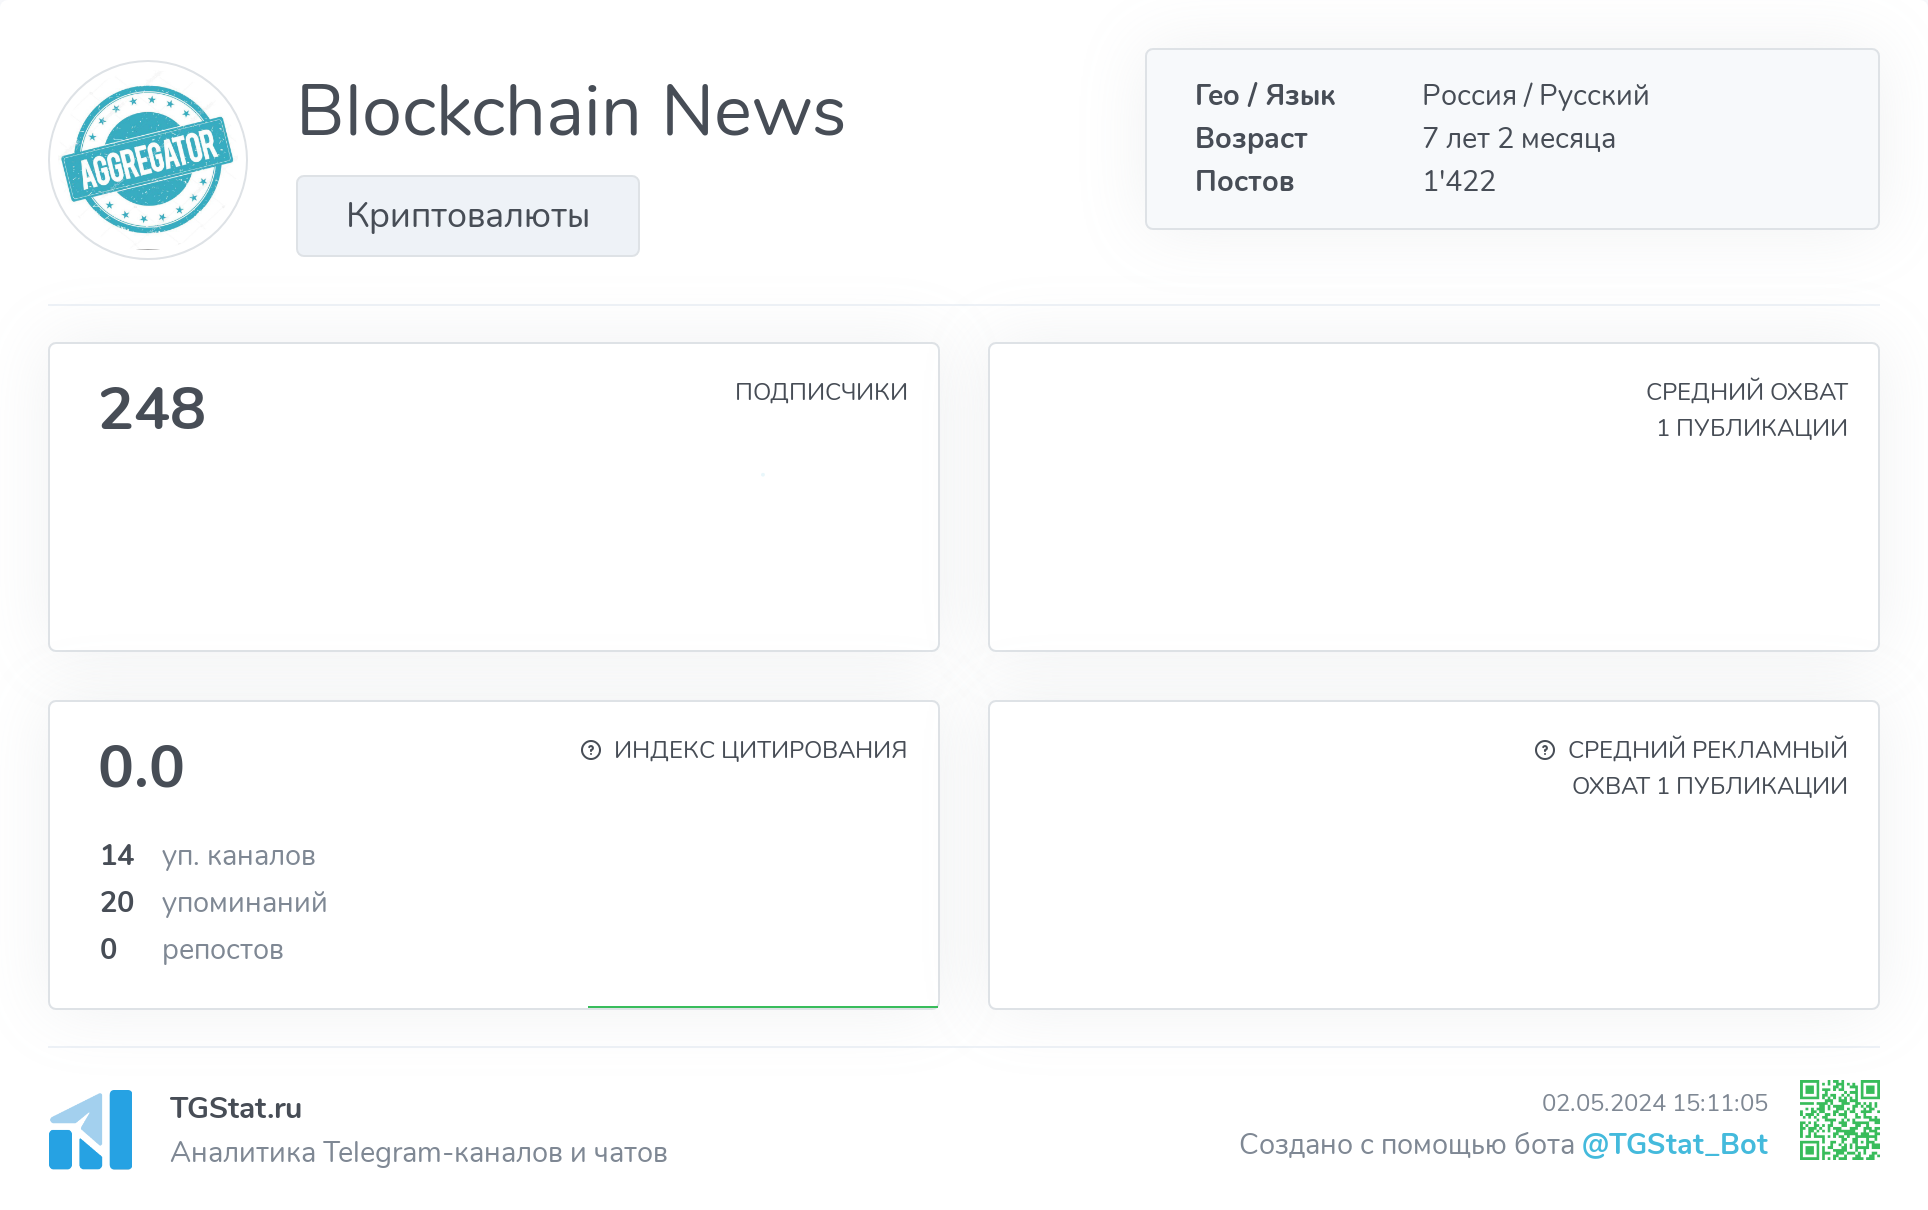 @Blockchain_News